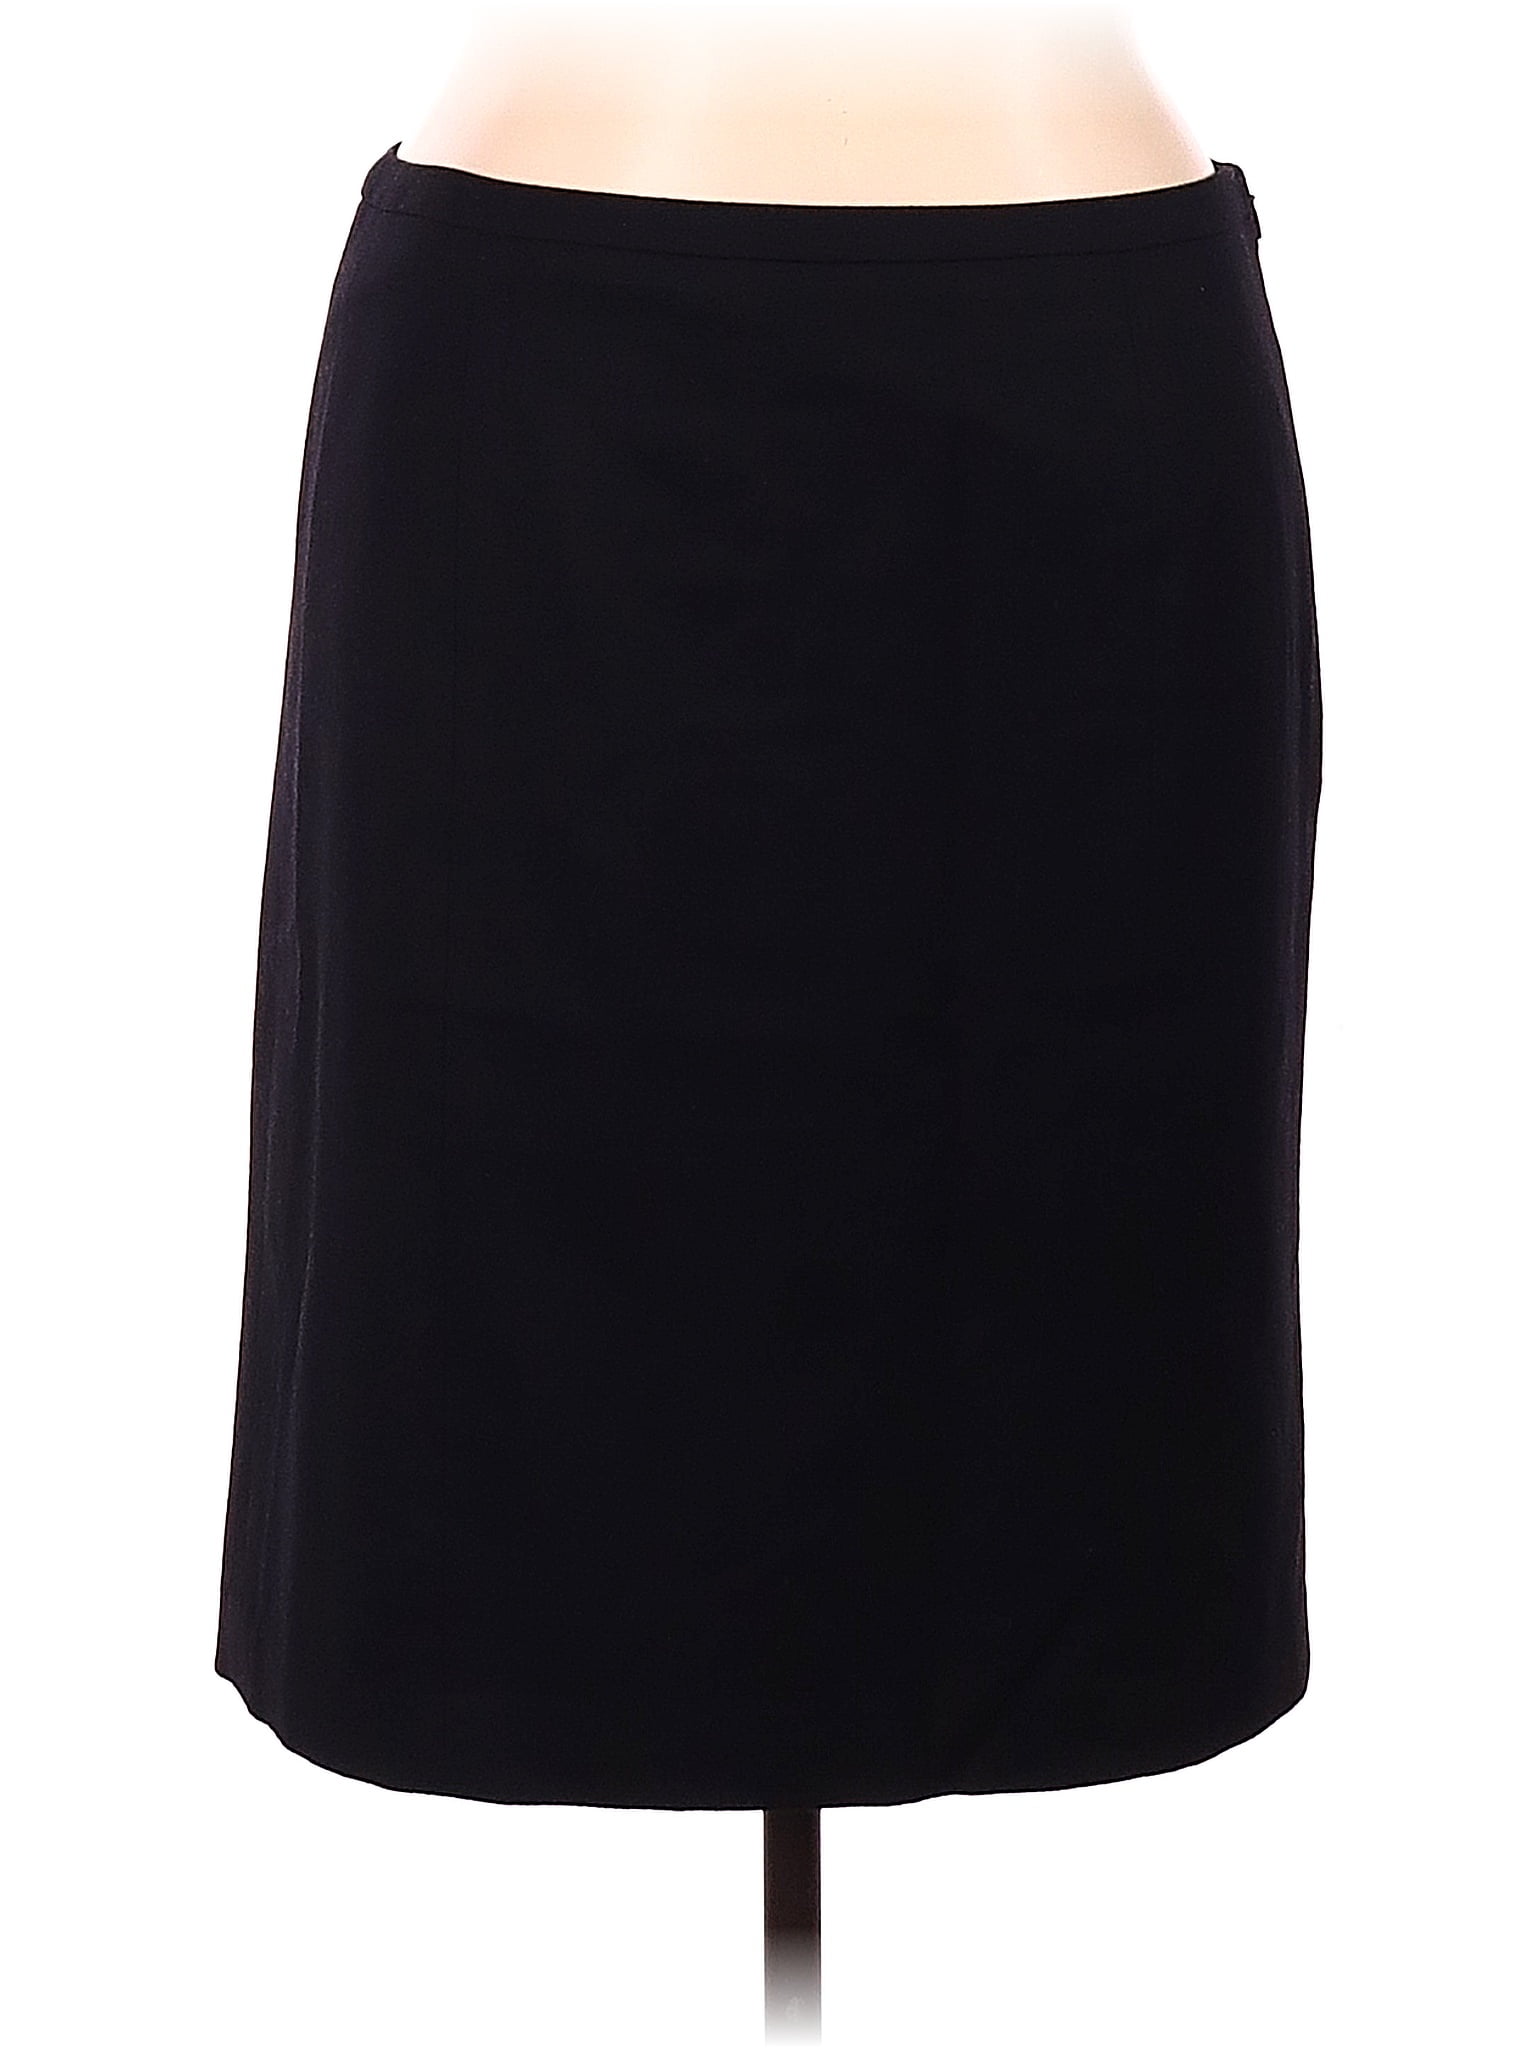 Talbots Solid Black Wool Skirt Size 16 (Petite) - 84% off | thredUP